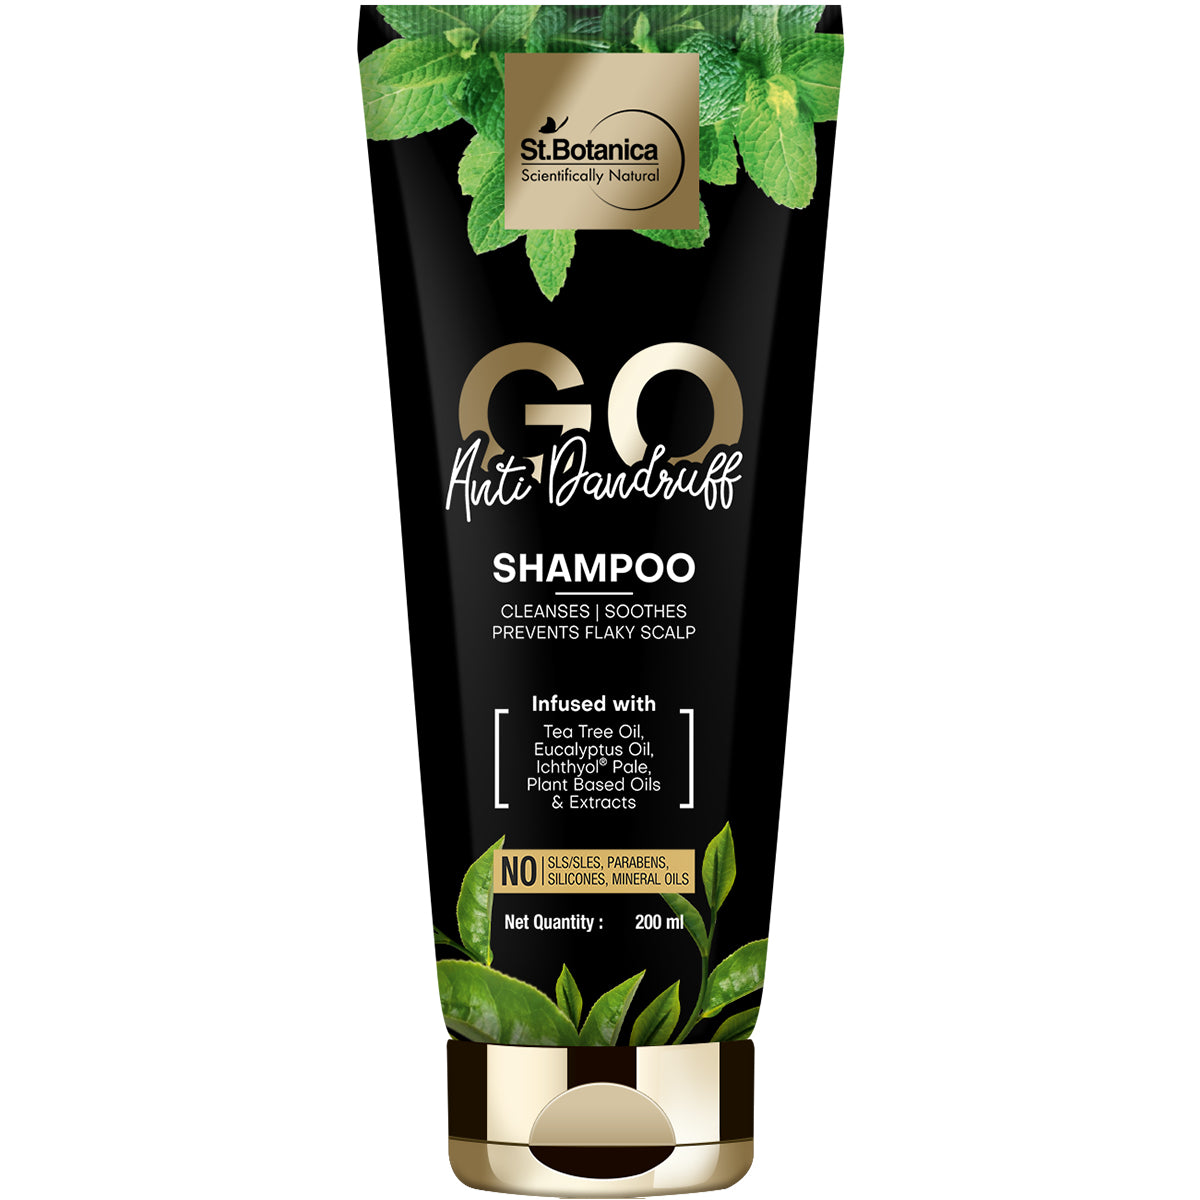 St.Botanica Go Anti-Dandruff Hair Shampoo - With Ichthyol Pale, Tea Tree, Eucalyptus Oil, No Sls/ Sulphate, Paraben, Silicones, Colors, 200 ml